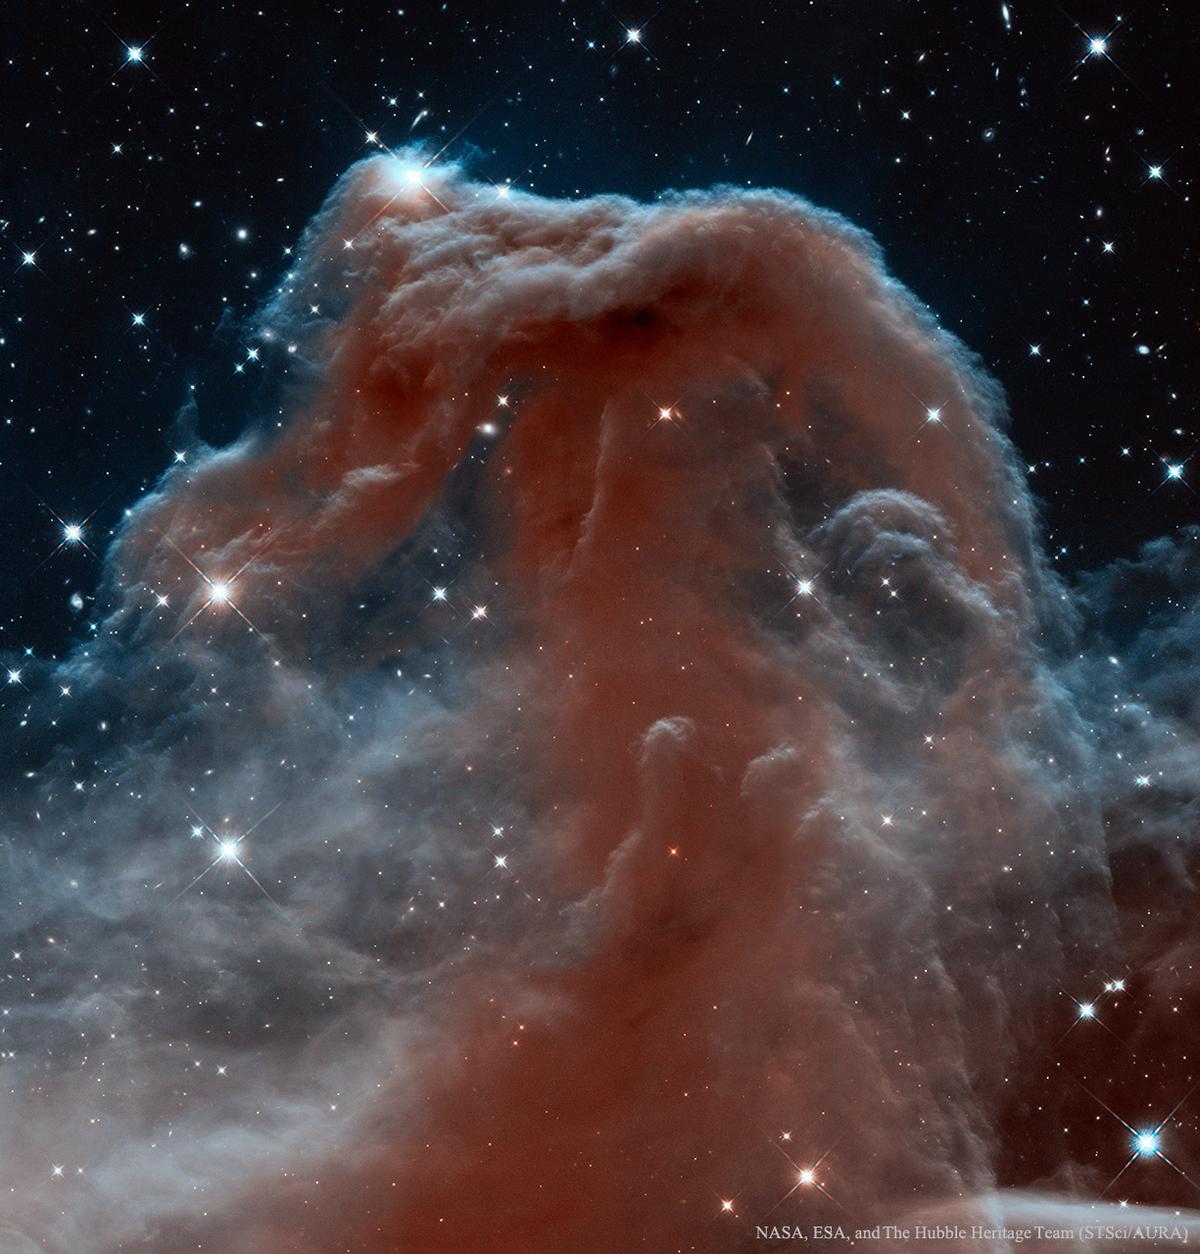 (NASA, ESA, and The Hubble Heritage Team/STScI/AURA)